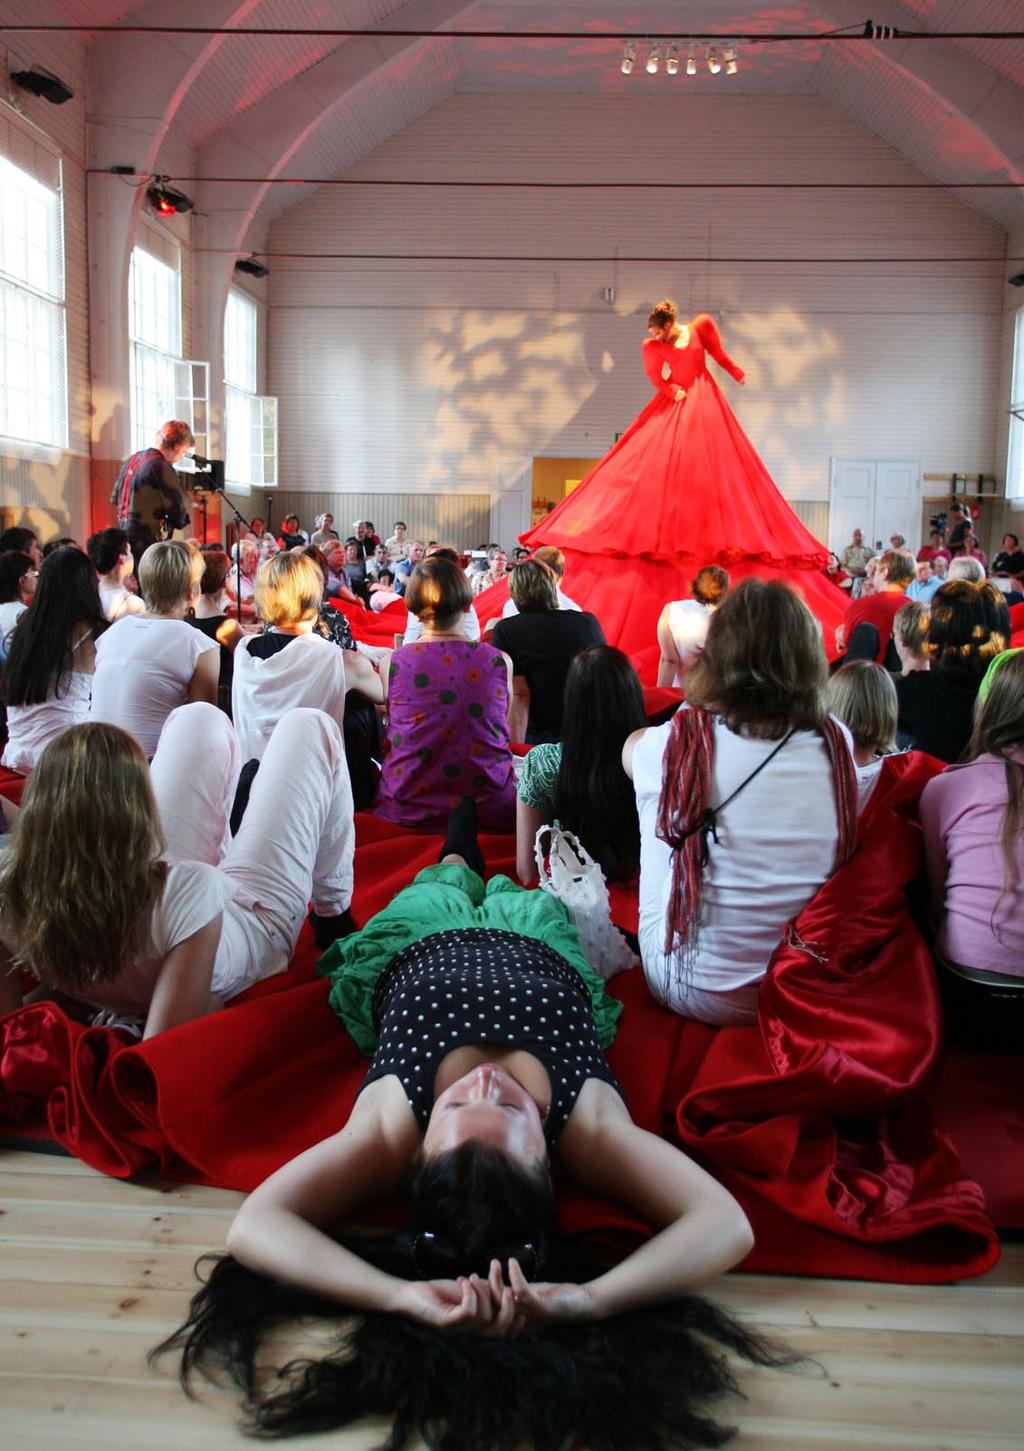 Reddress is a door to a secret place Reddress Video clips (click below) > Designer Aamu Song speaks about the dress > From the London Design Festival - Pekka Kuusisto REDDRESS: POCKET PROJECTS